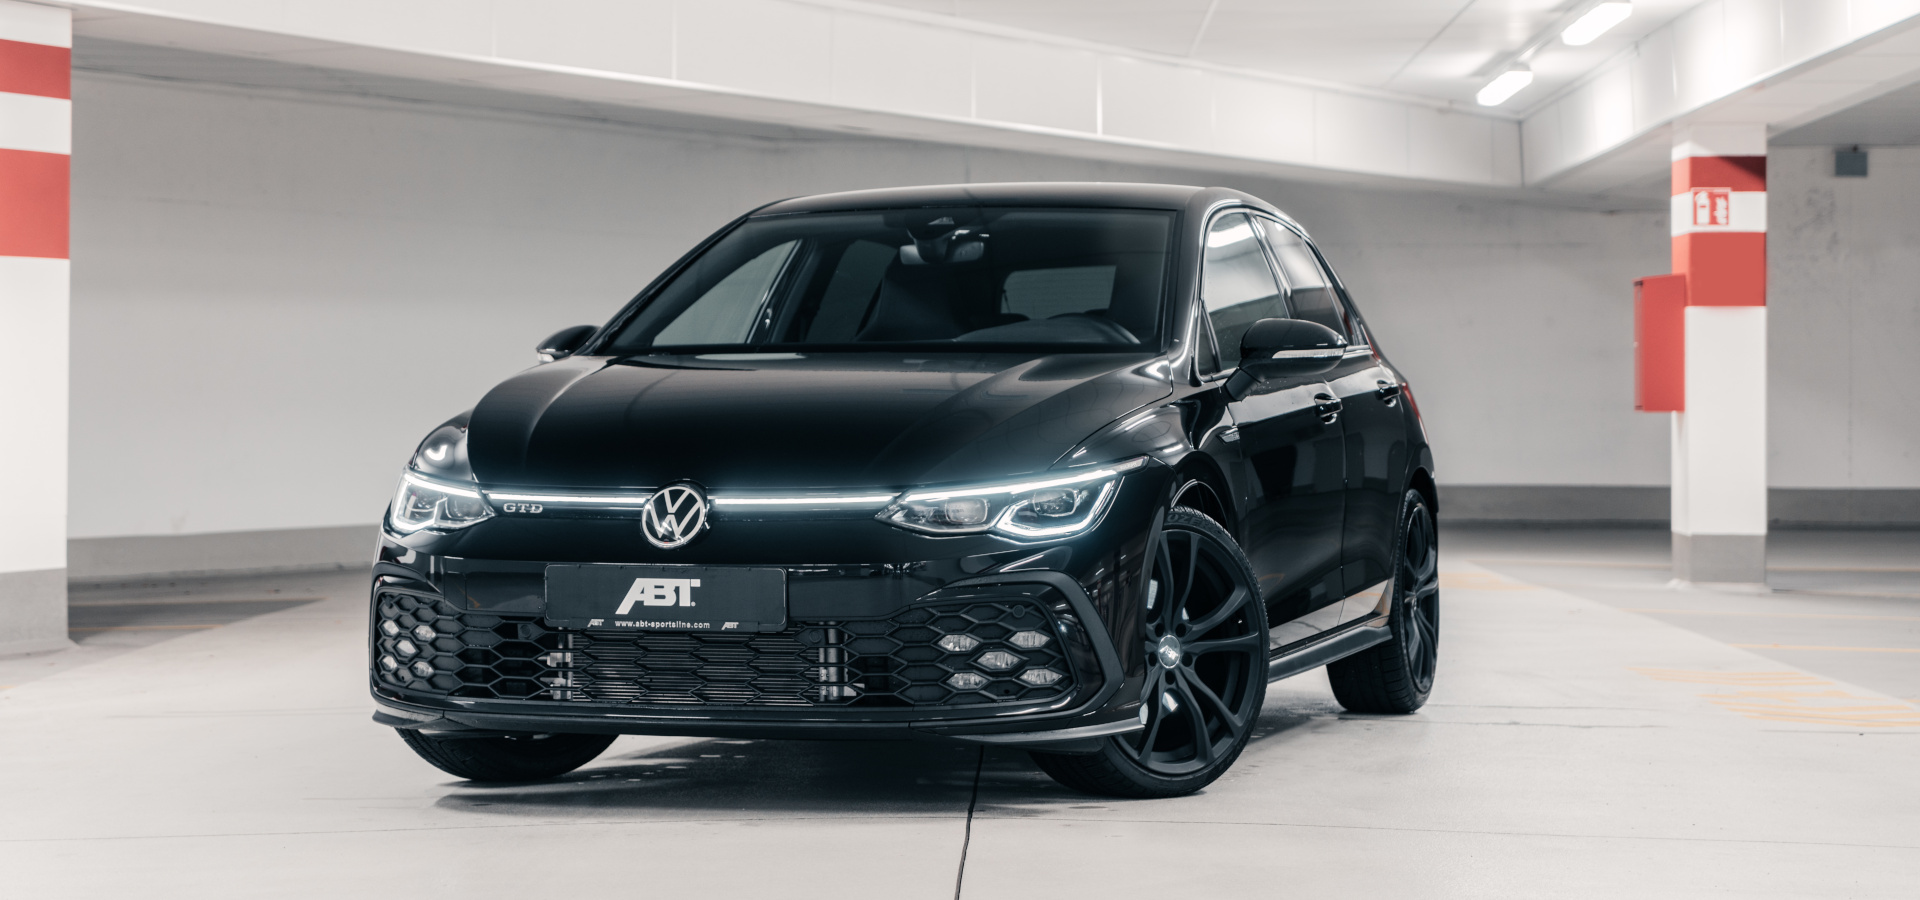 2021 Volkswagen Golf 8 GTI (245 HP) in Deep Black